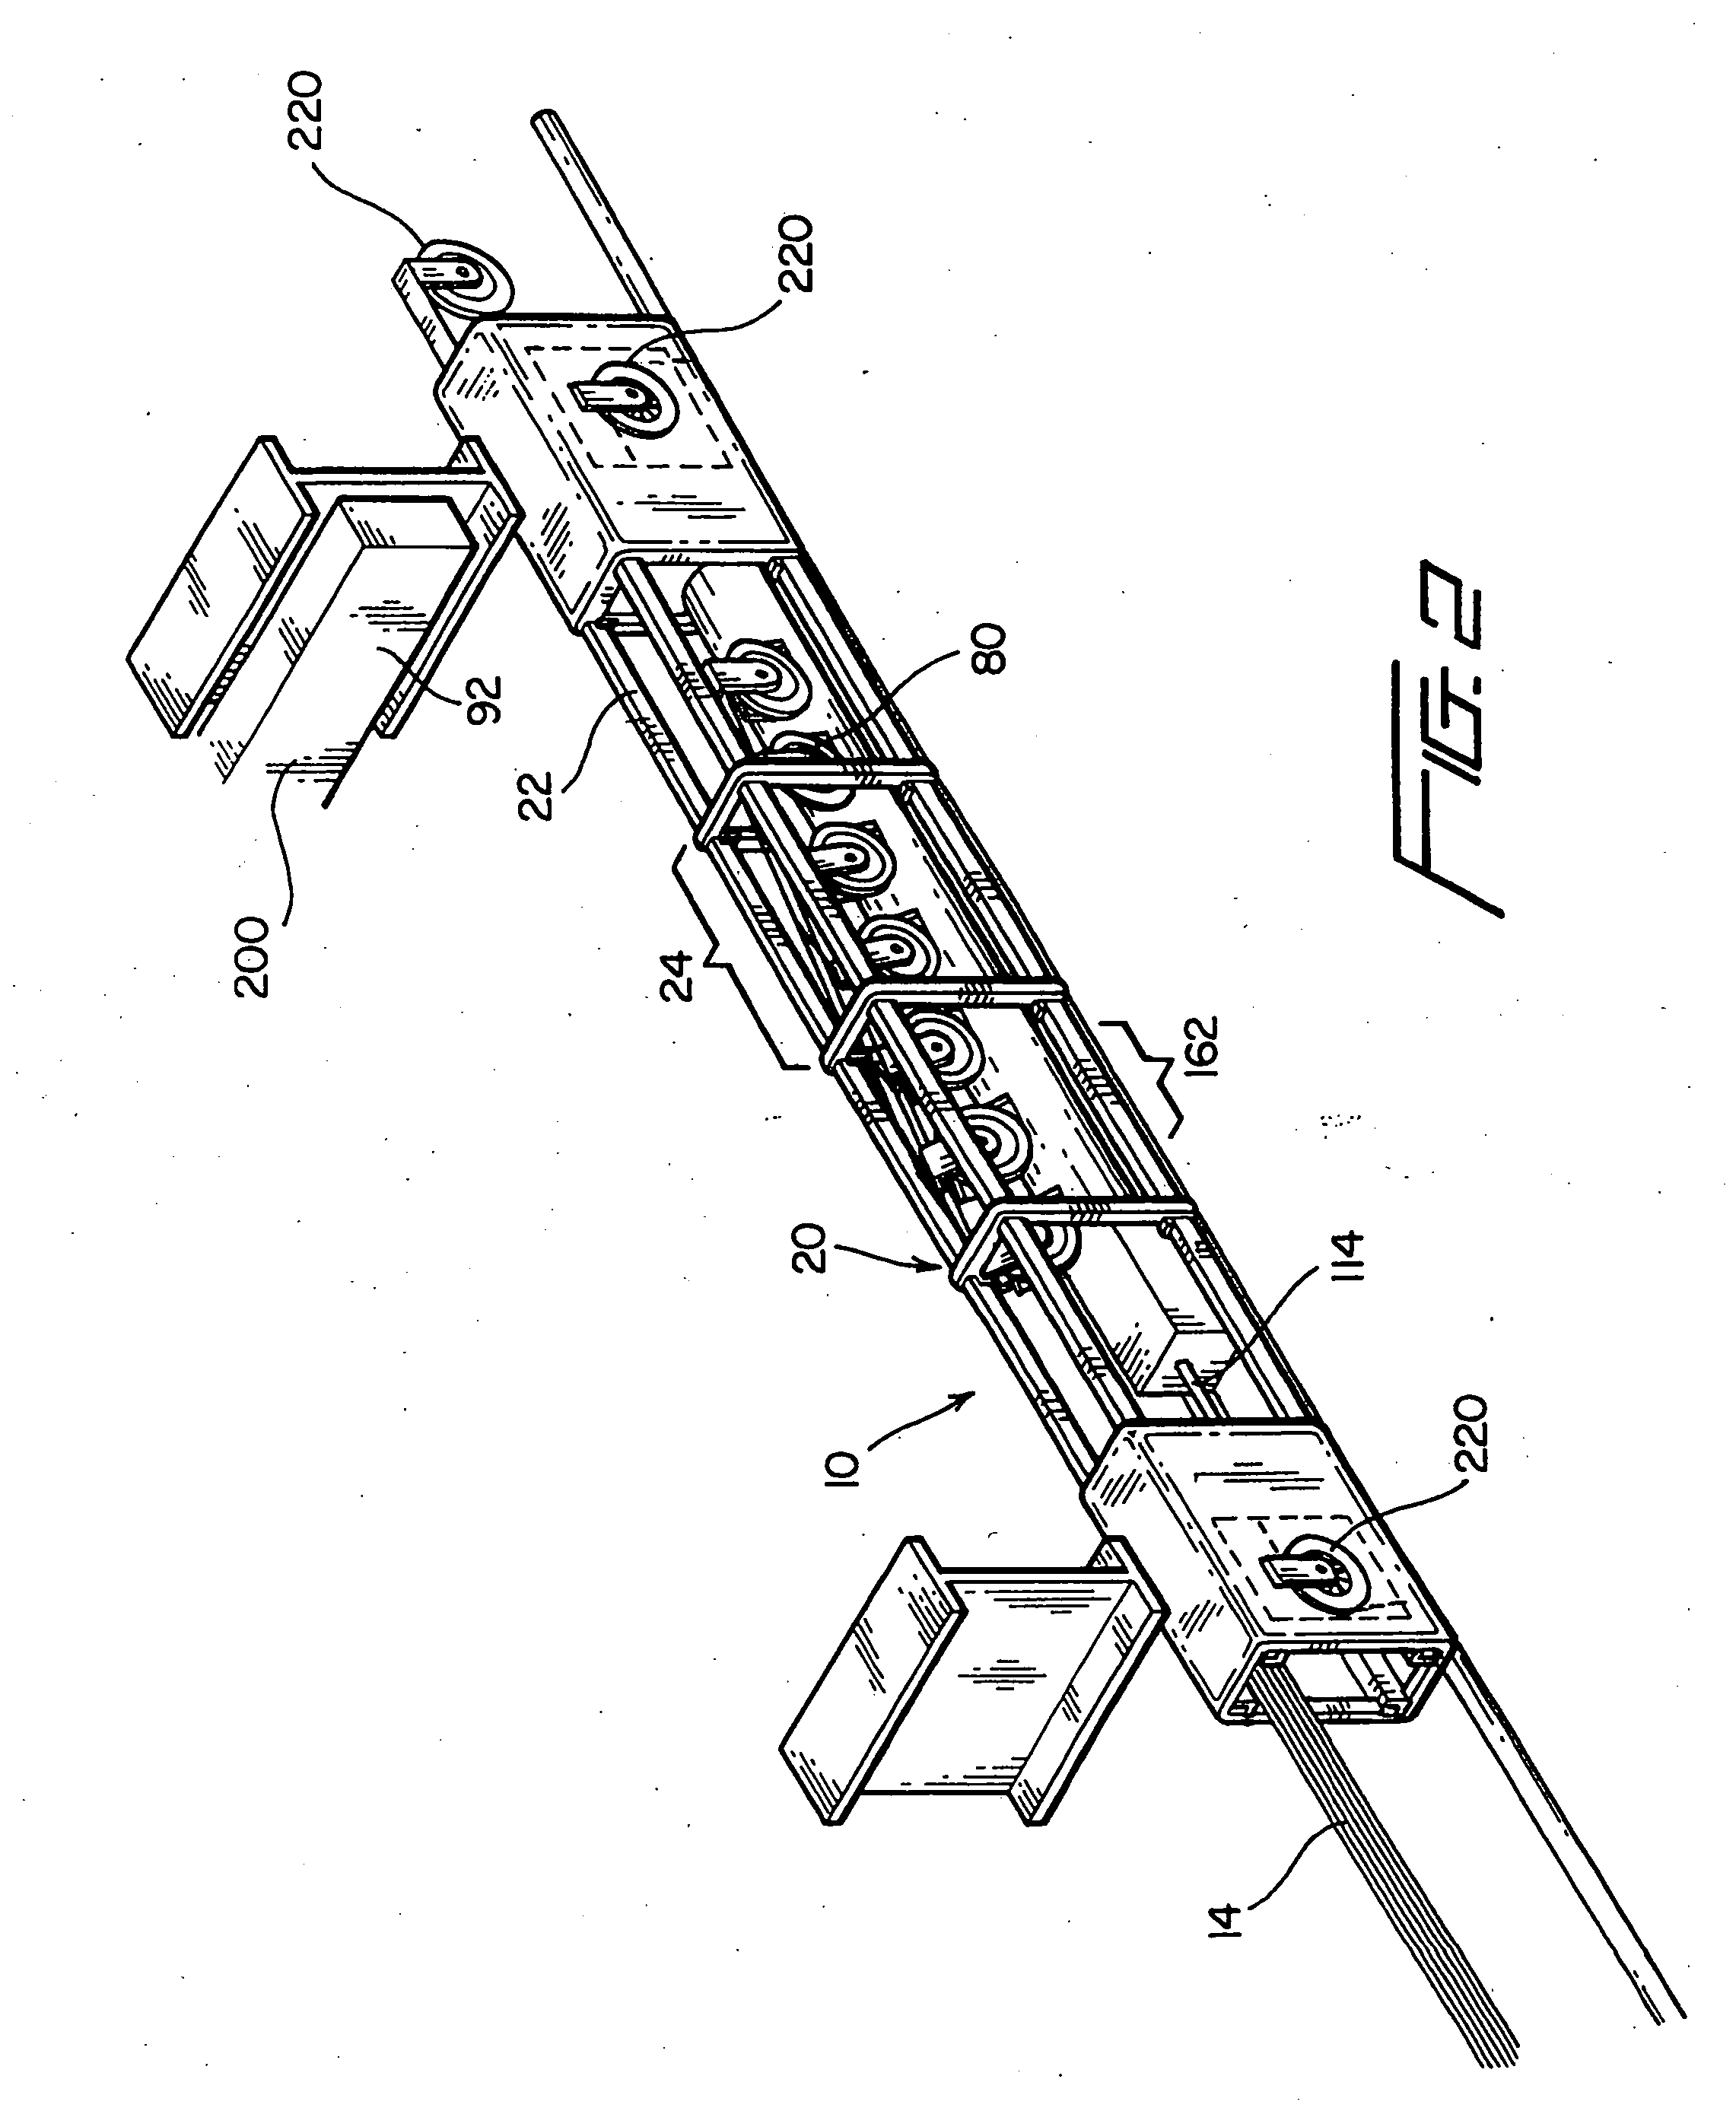 Modular lift assembly